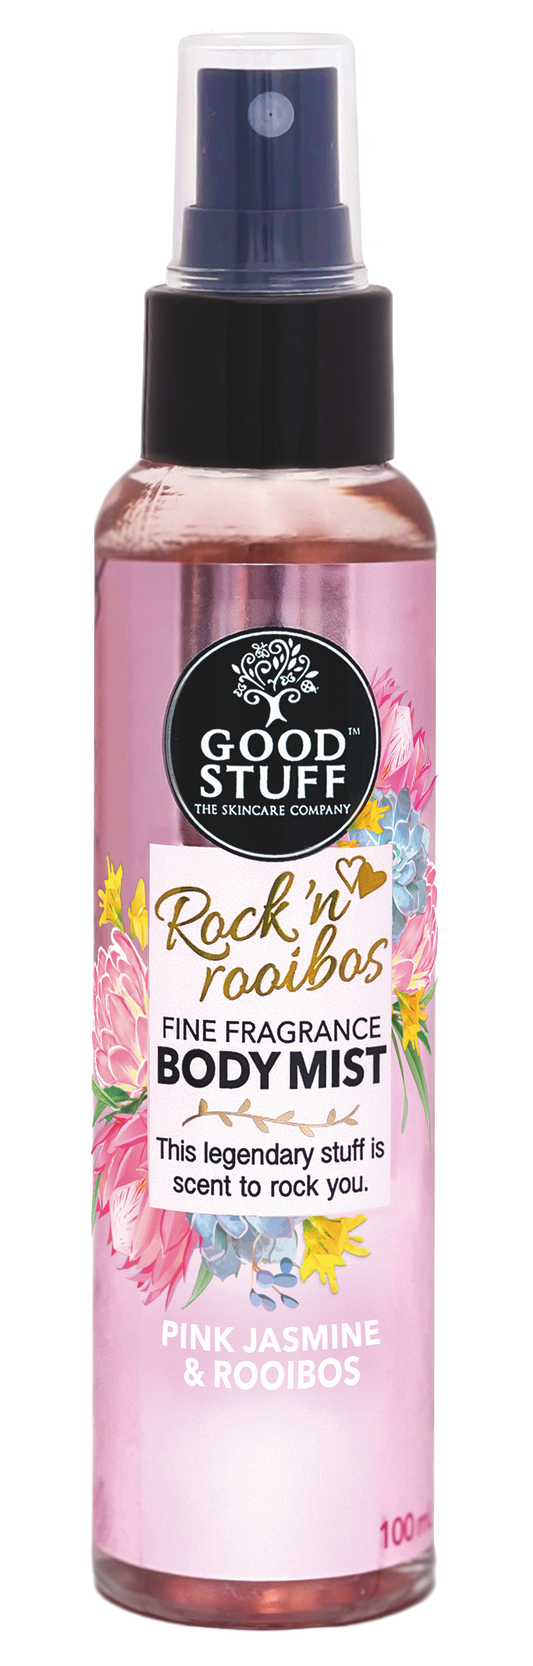 Body Mist - Good Stuff Rock 'n Rooibos